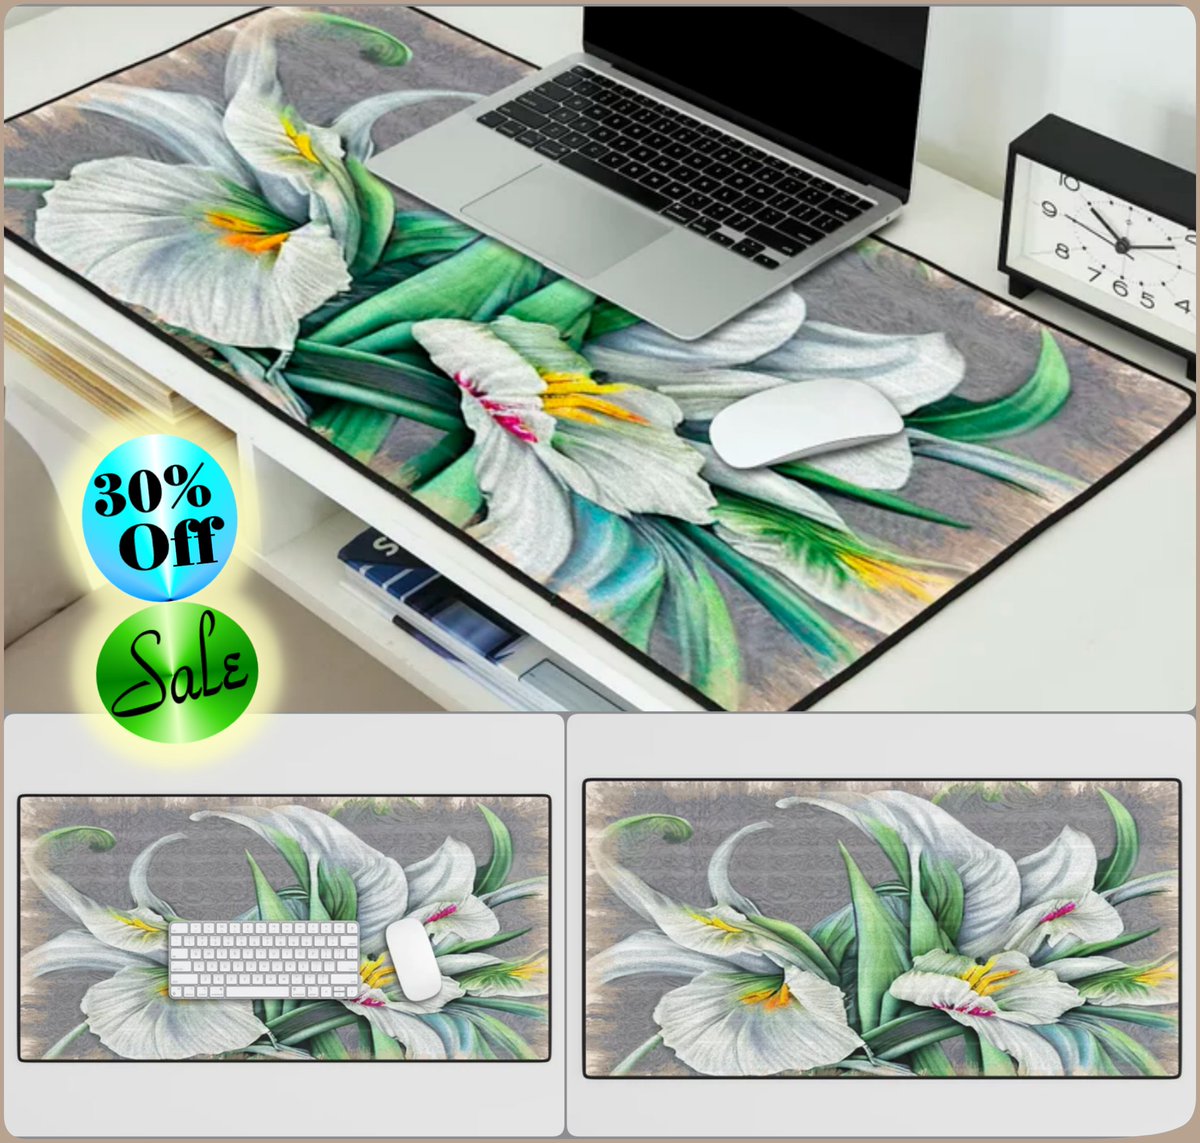 *SALE 30% Off* Serene Morning Desk Mat~Desk Art~ #artfalaxy #art #phones #cases #society6 #Society6max #swirls #modern #trendy #accessories #office #wallet #iphone #ipad #desk #mouse #laptop #sleeves #green #gray #white #yellow society6.com/product/serene…